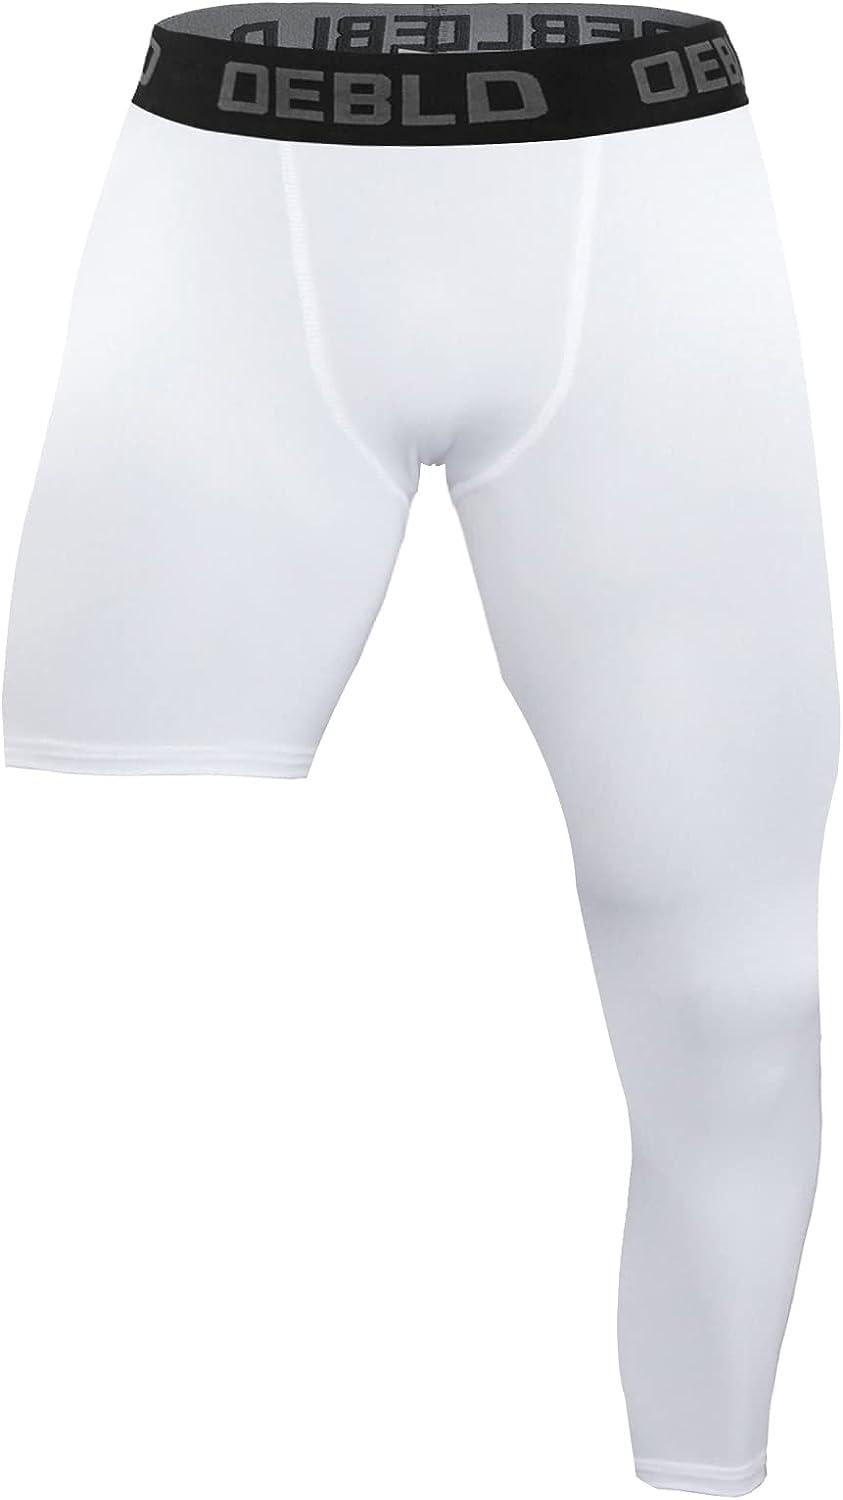 OEBLD Single Leg 3/4 Compression Tights, Unisex Sports Compression Pants,  One Leg Basketball Leg Sleeves Black+white-right-short Medium